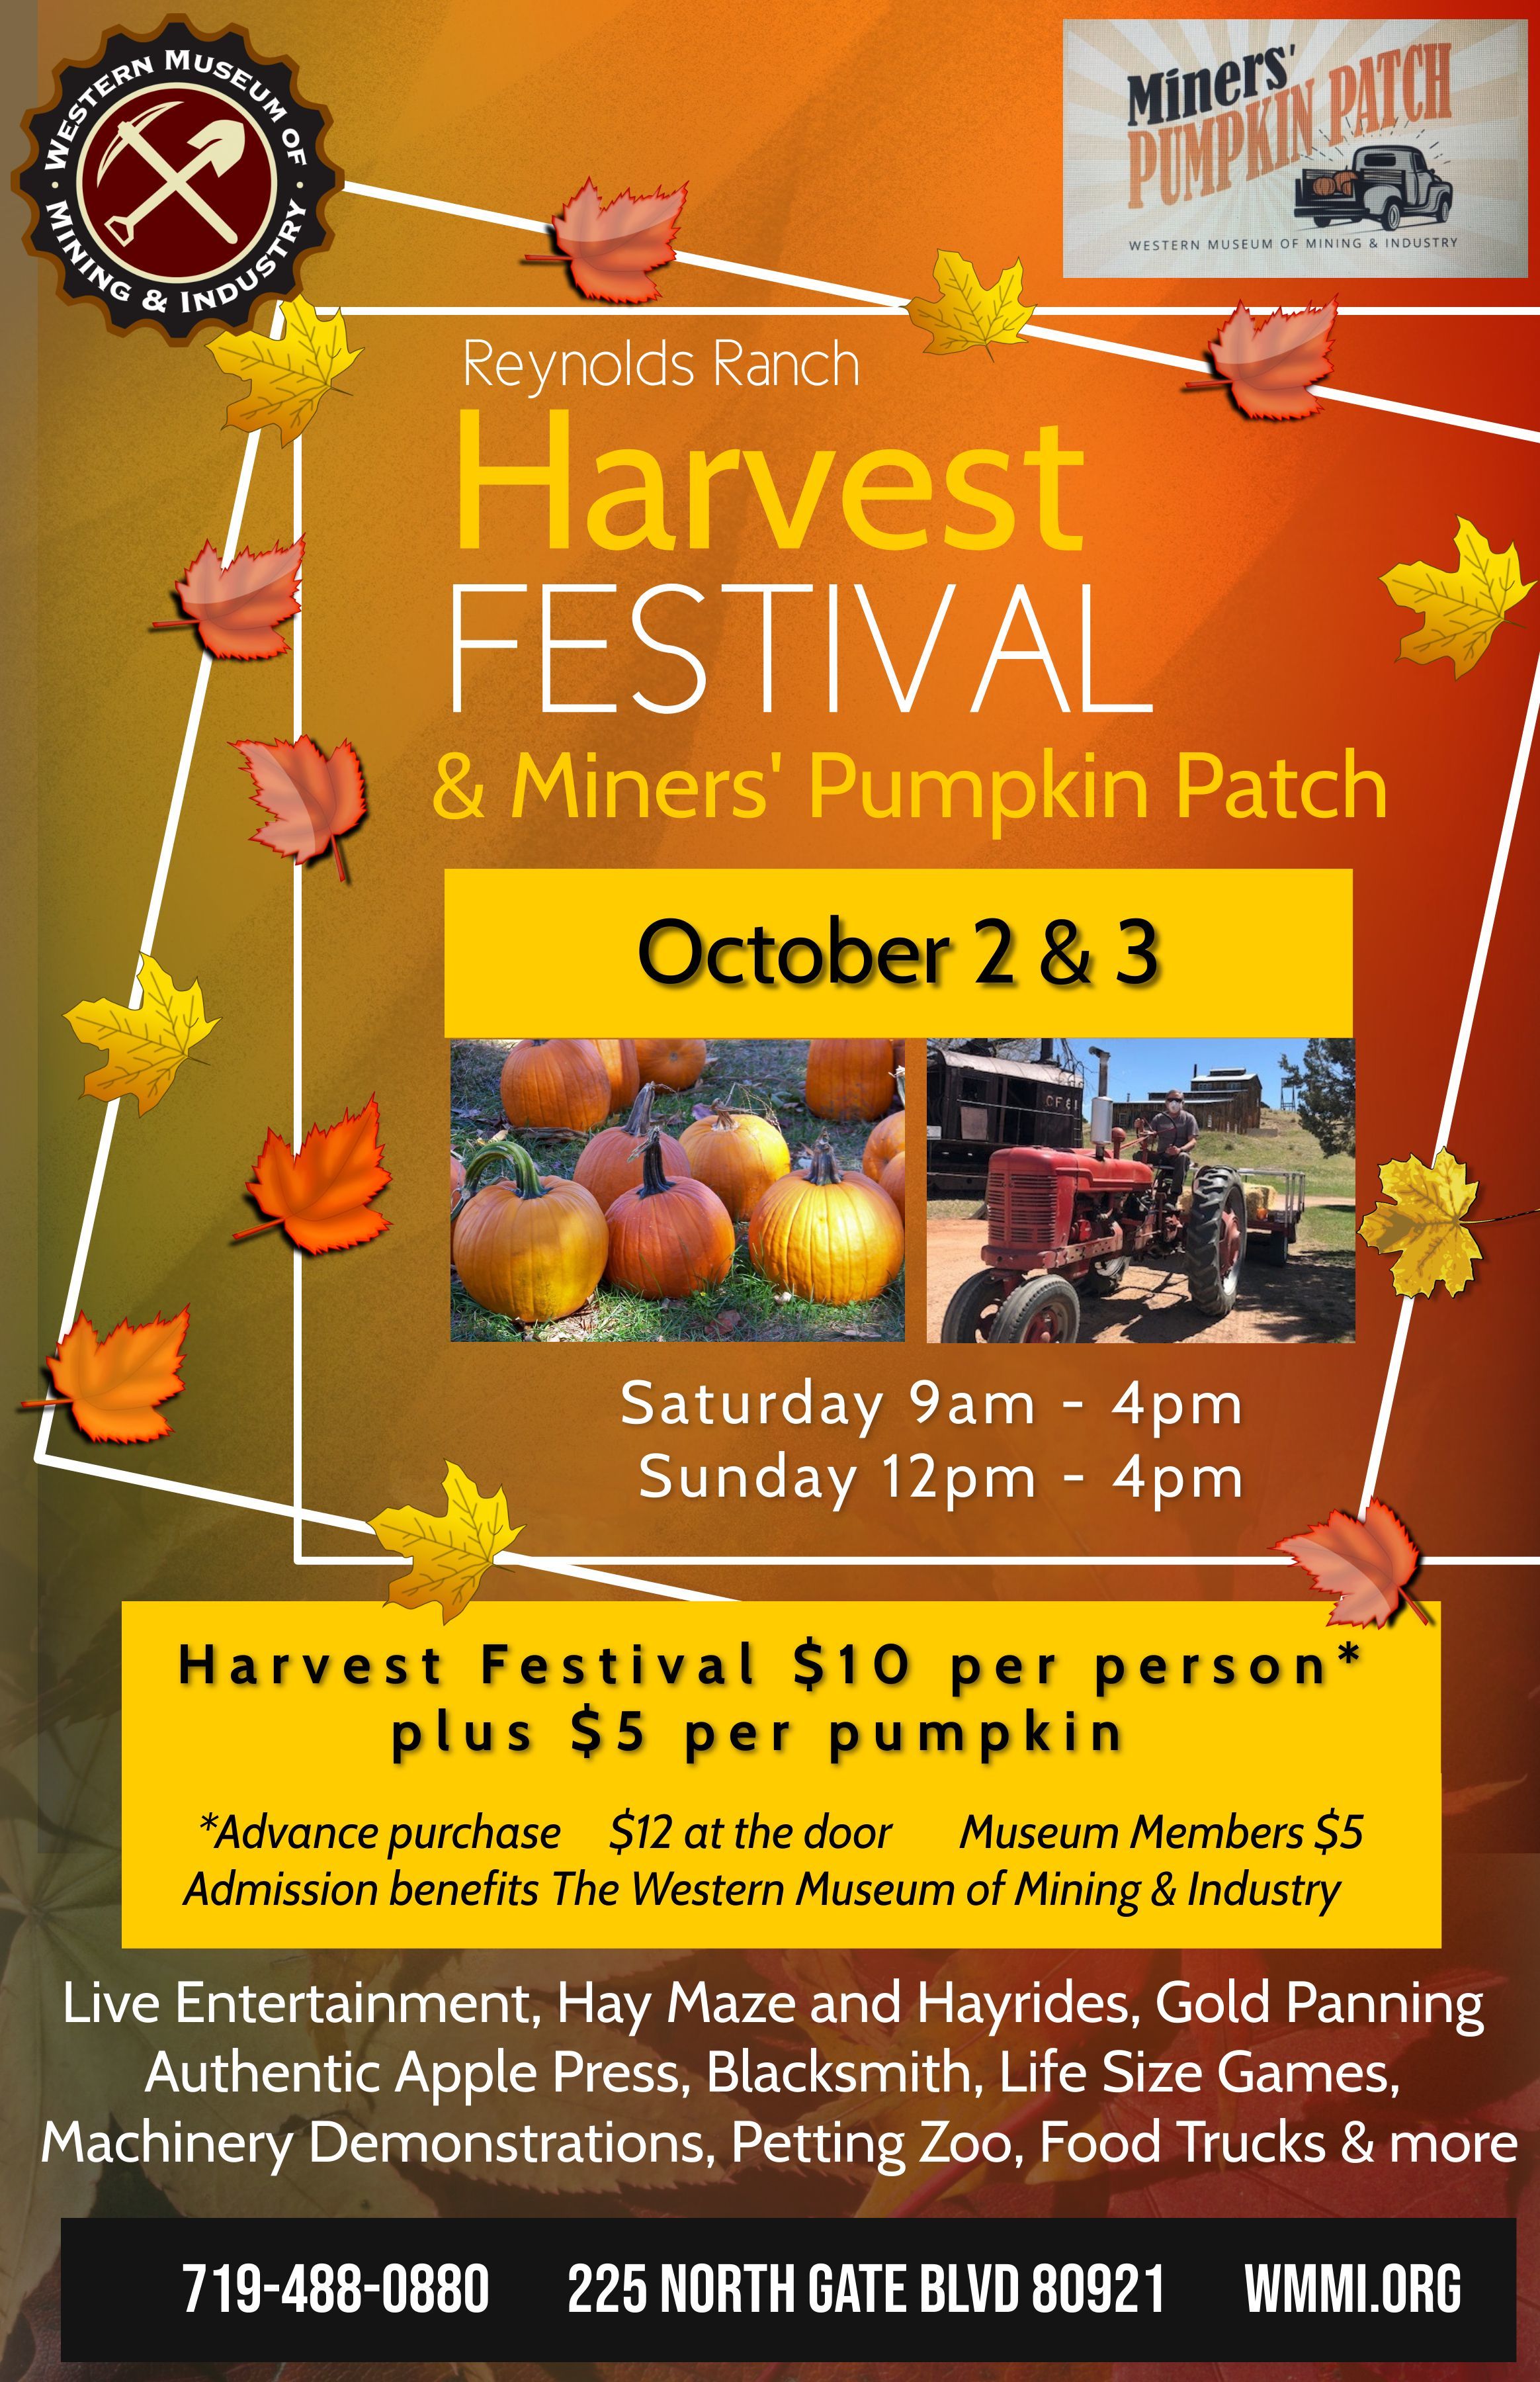 Reynolds Ranch Harvest Festival & Miners' Pumpkin Patch